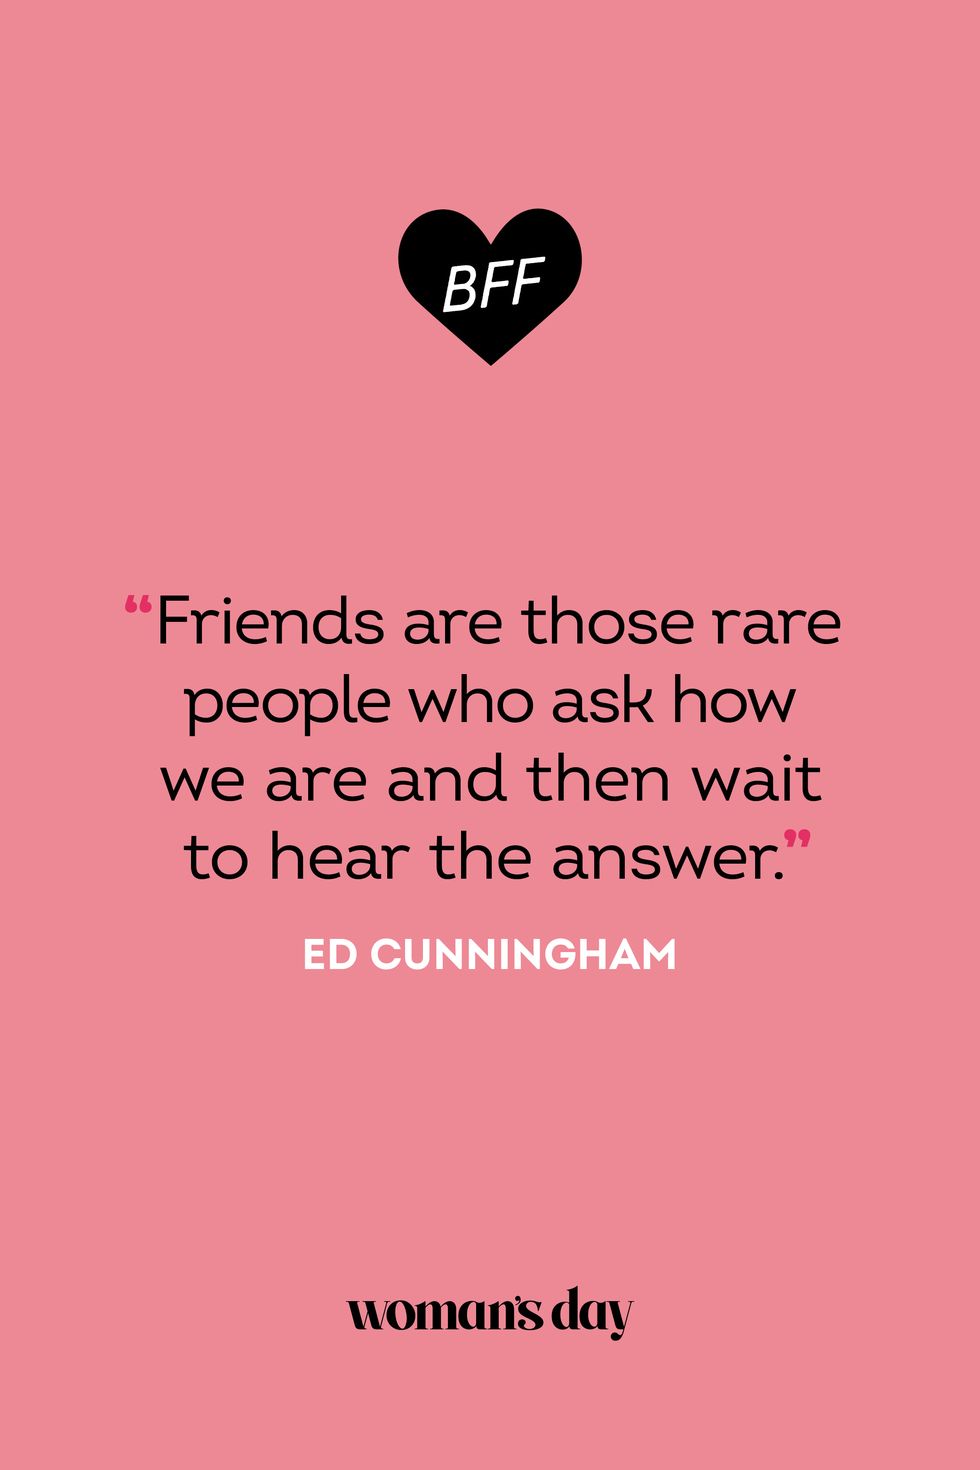 amazing friendship quotes